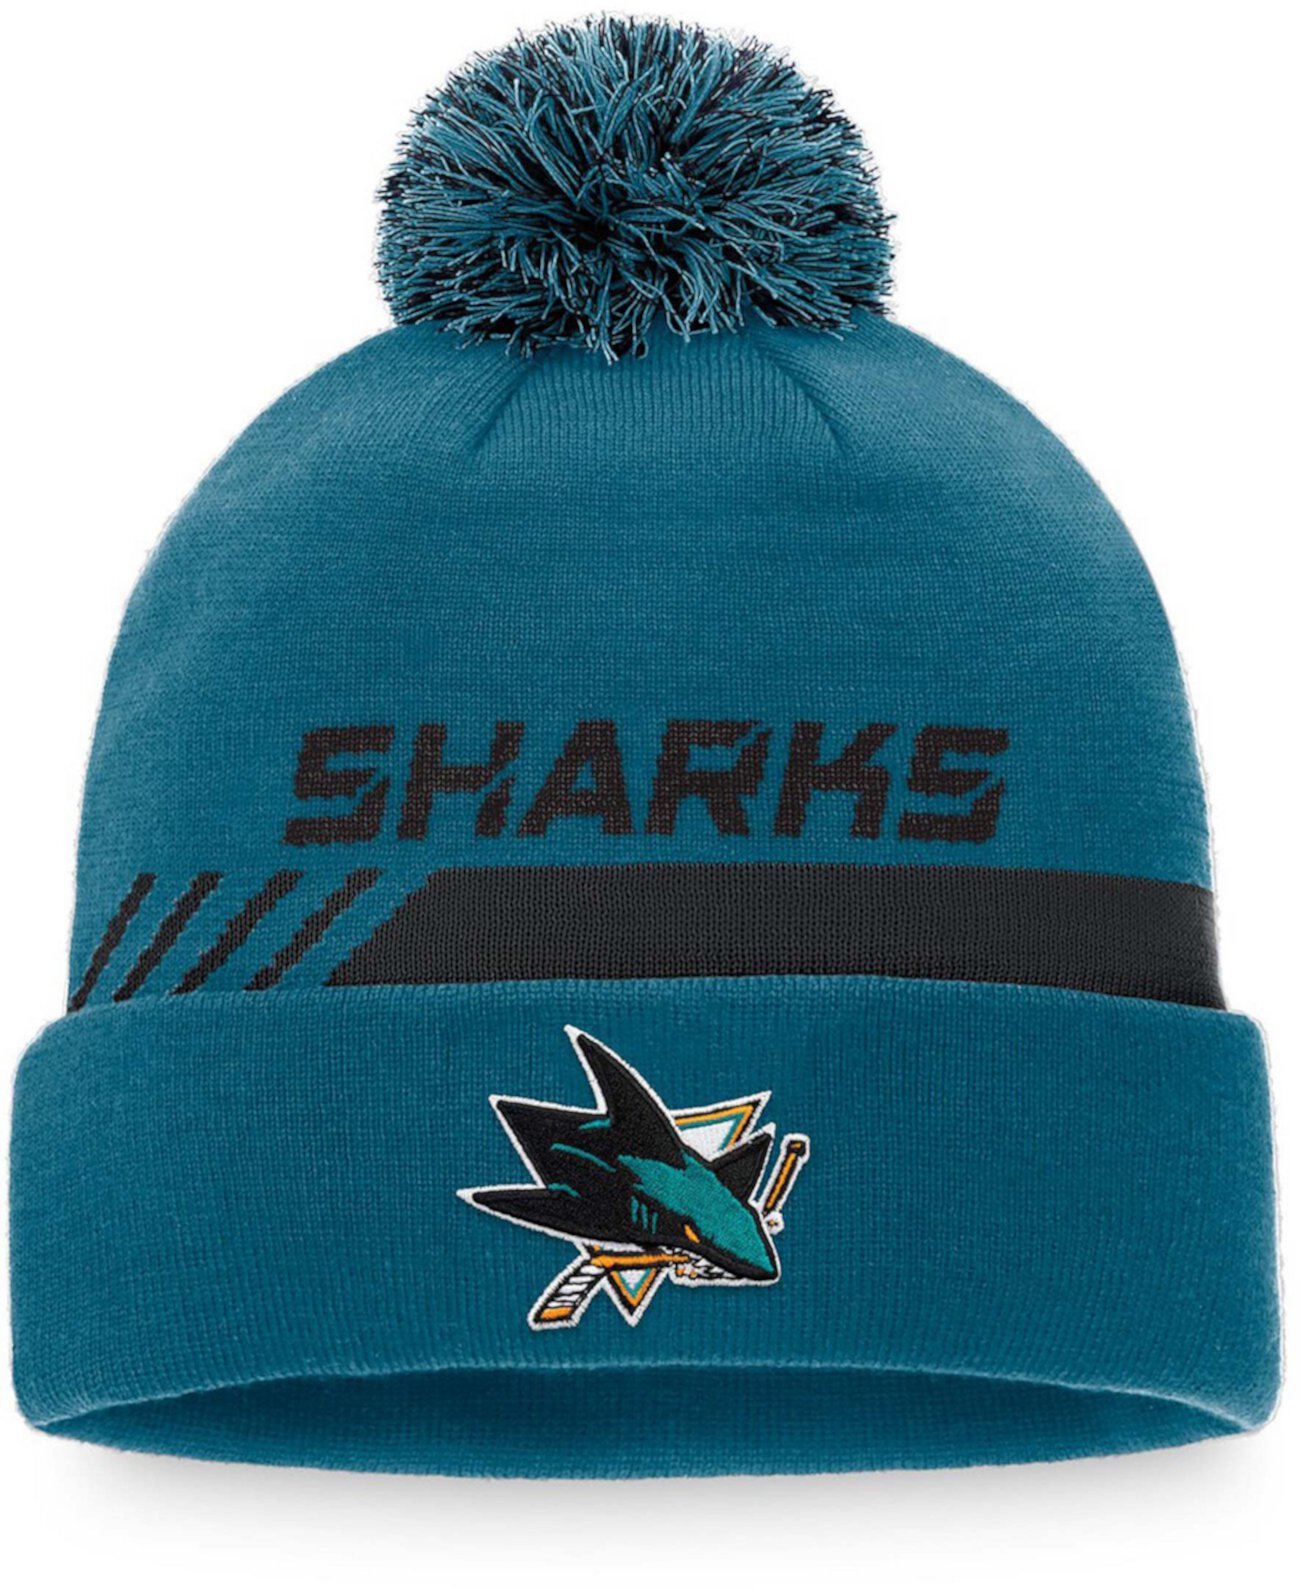 Мужская вязаная шапка с манжетами и манжетами для мужской раздевалки San Jose Sharks Authentic Pro Team с манжетами Fanatics Lids